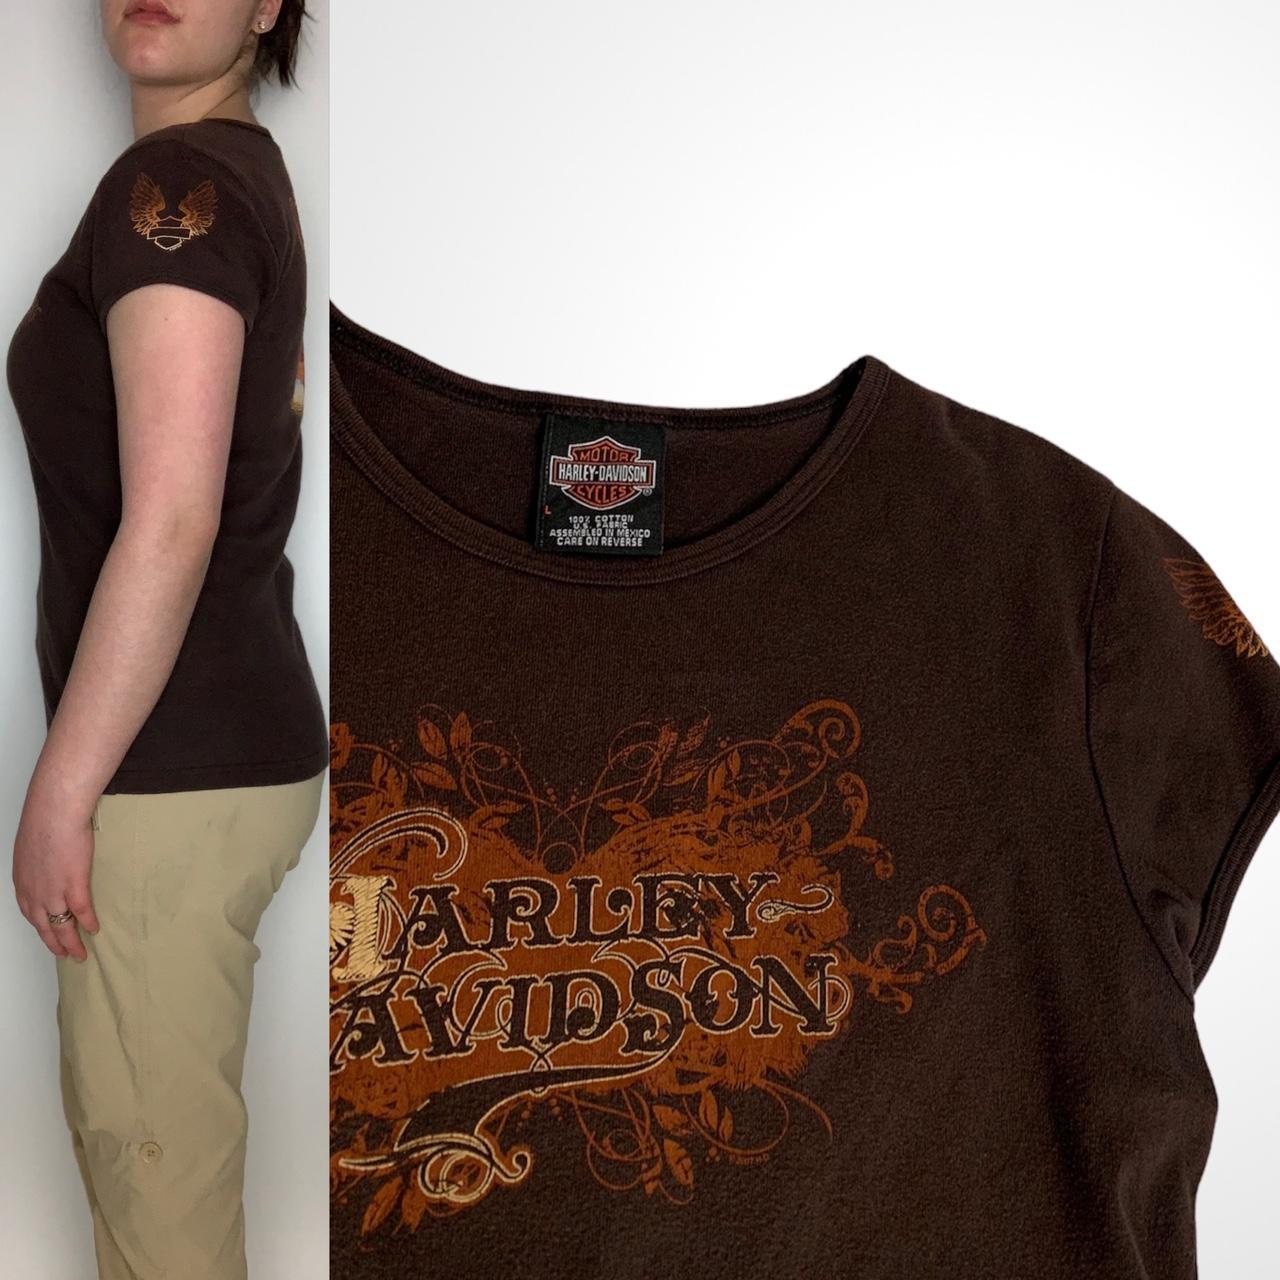 Harley Davidson vintage brown t-shirt with palm beach print